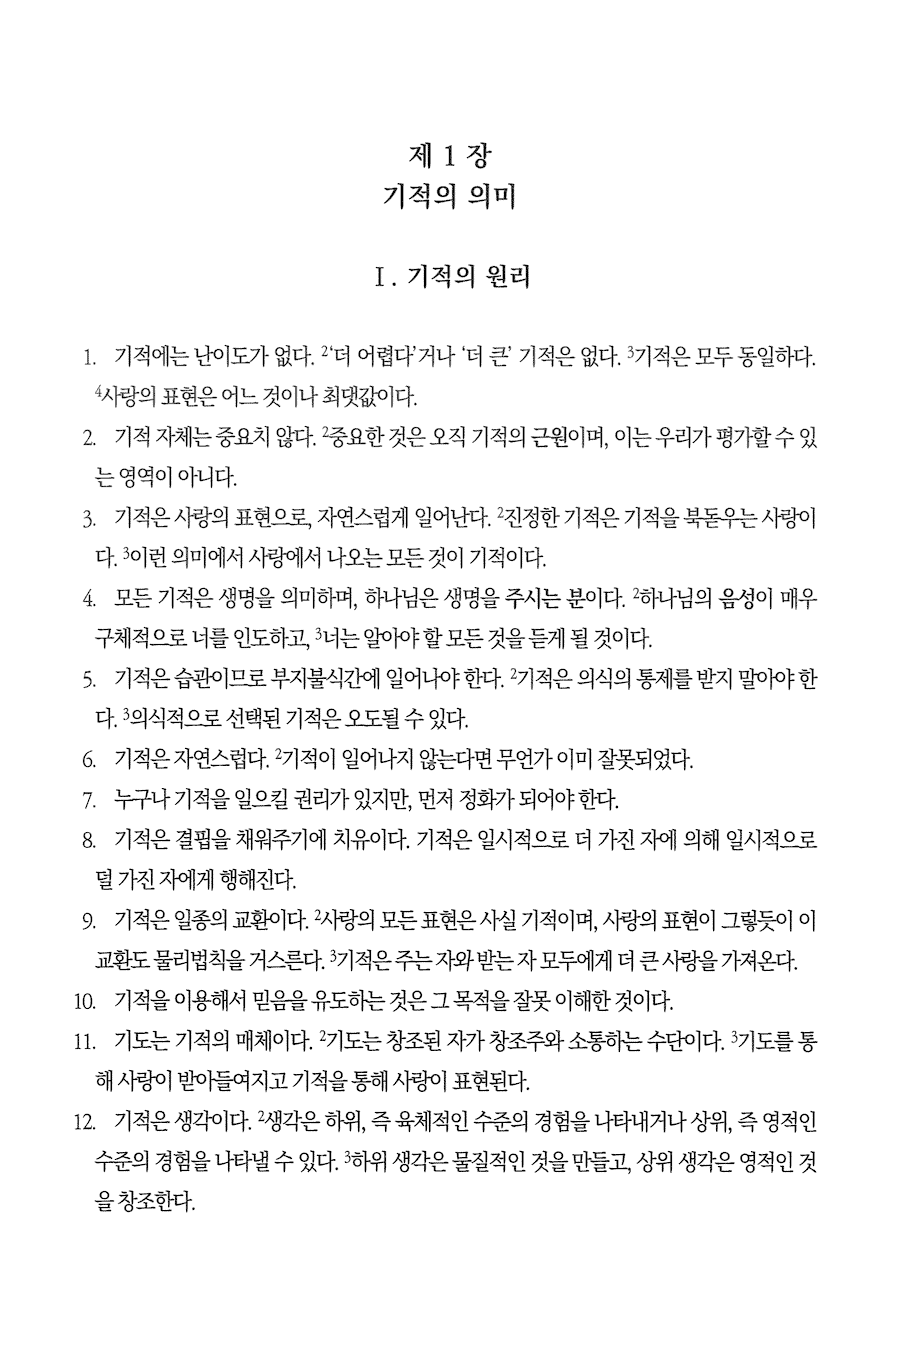 photo - sample page: Sample Translation - Korean